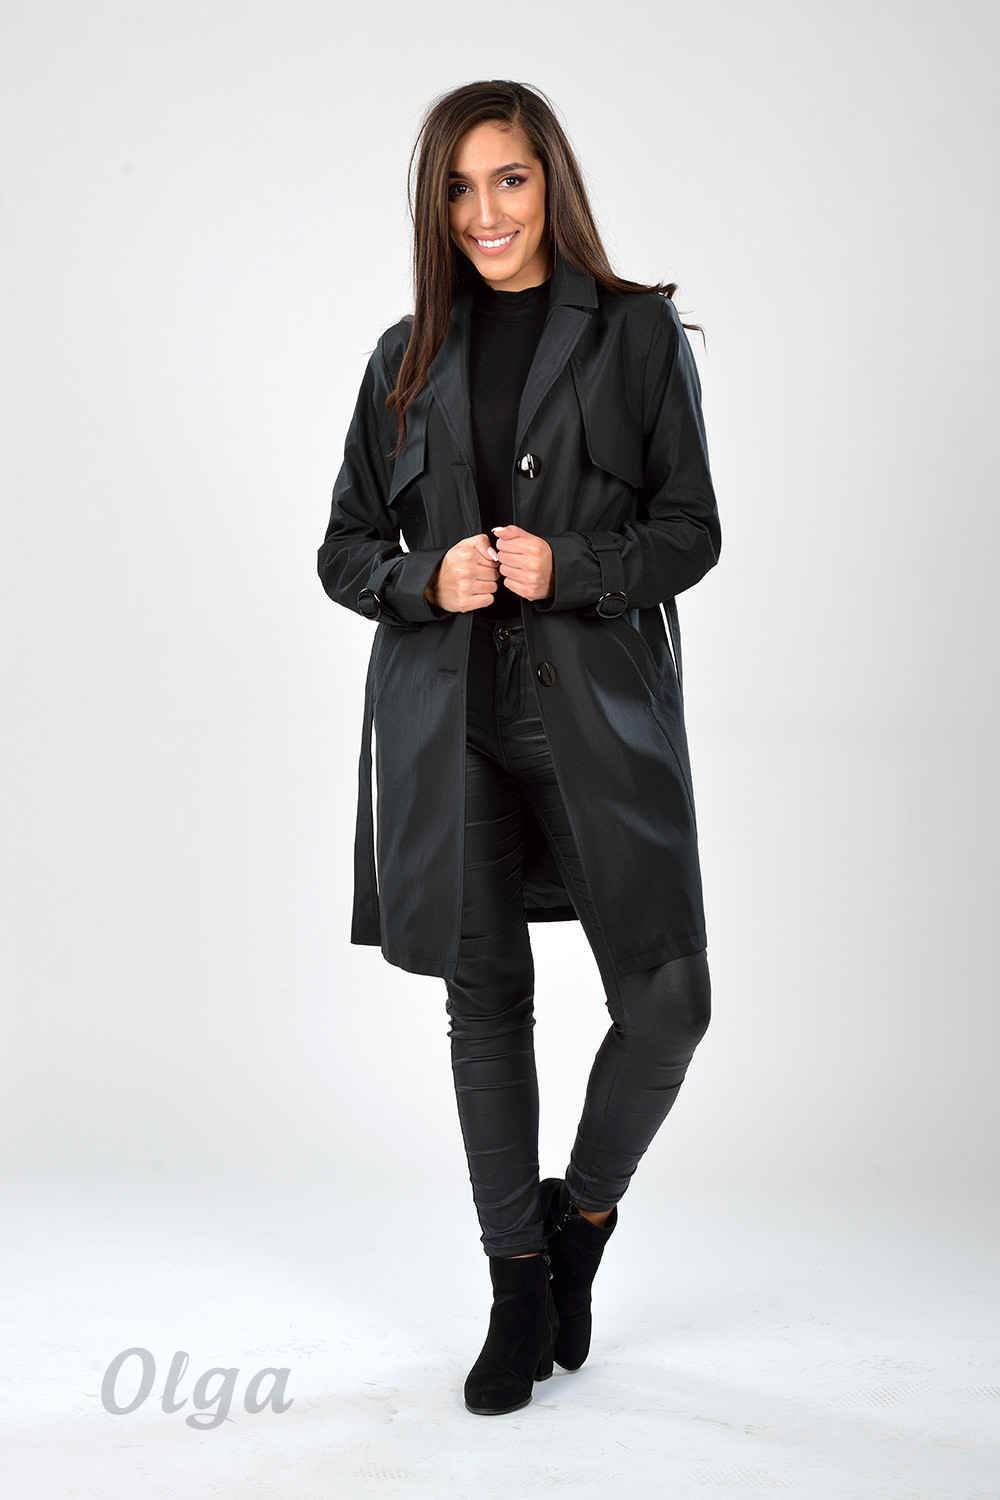 Gamstel Coat-Olga PW4 Black XL